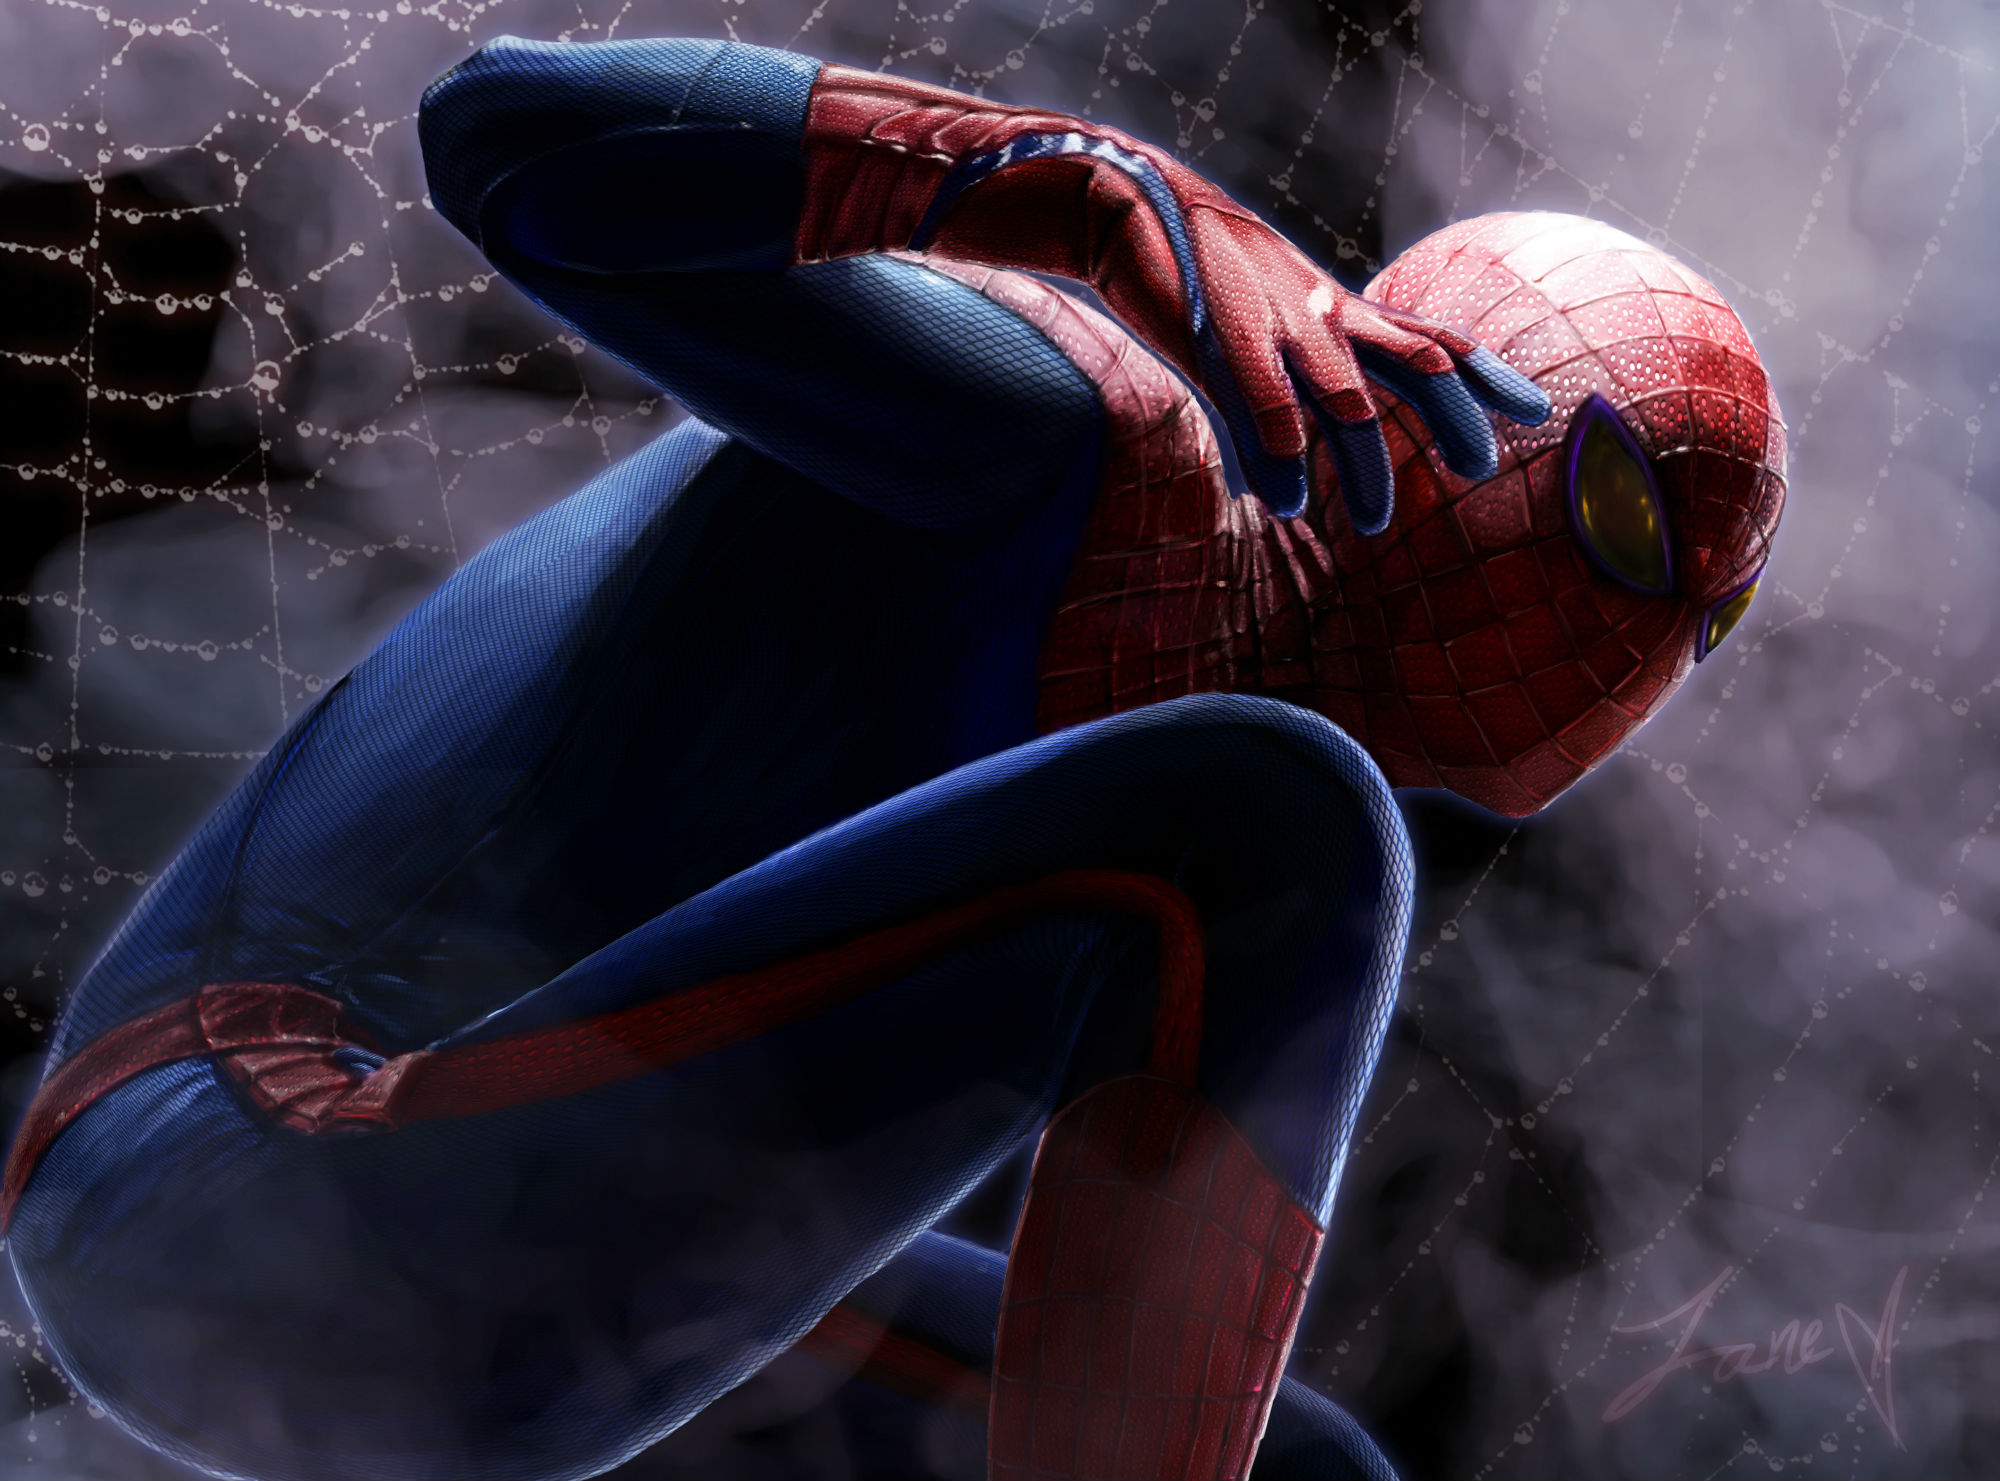 örümcek adam wallpaper,spider man,fictional character,superhero,cg artwork